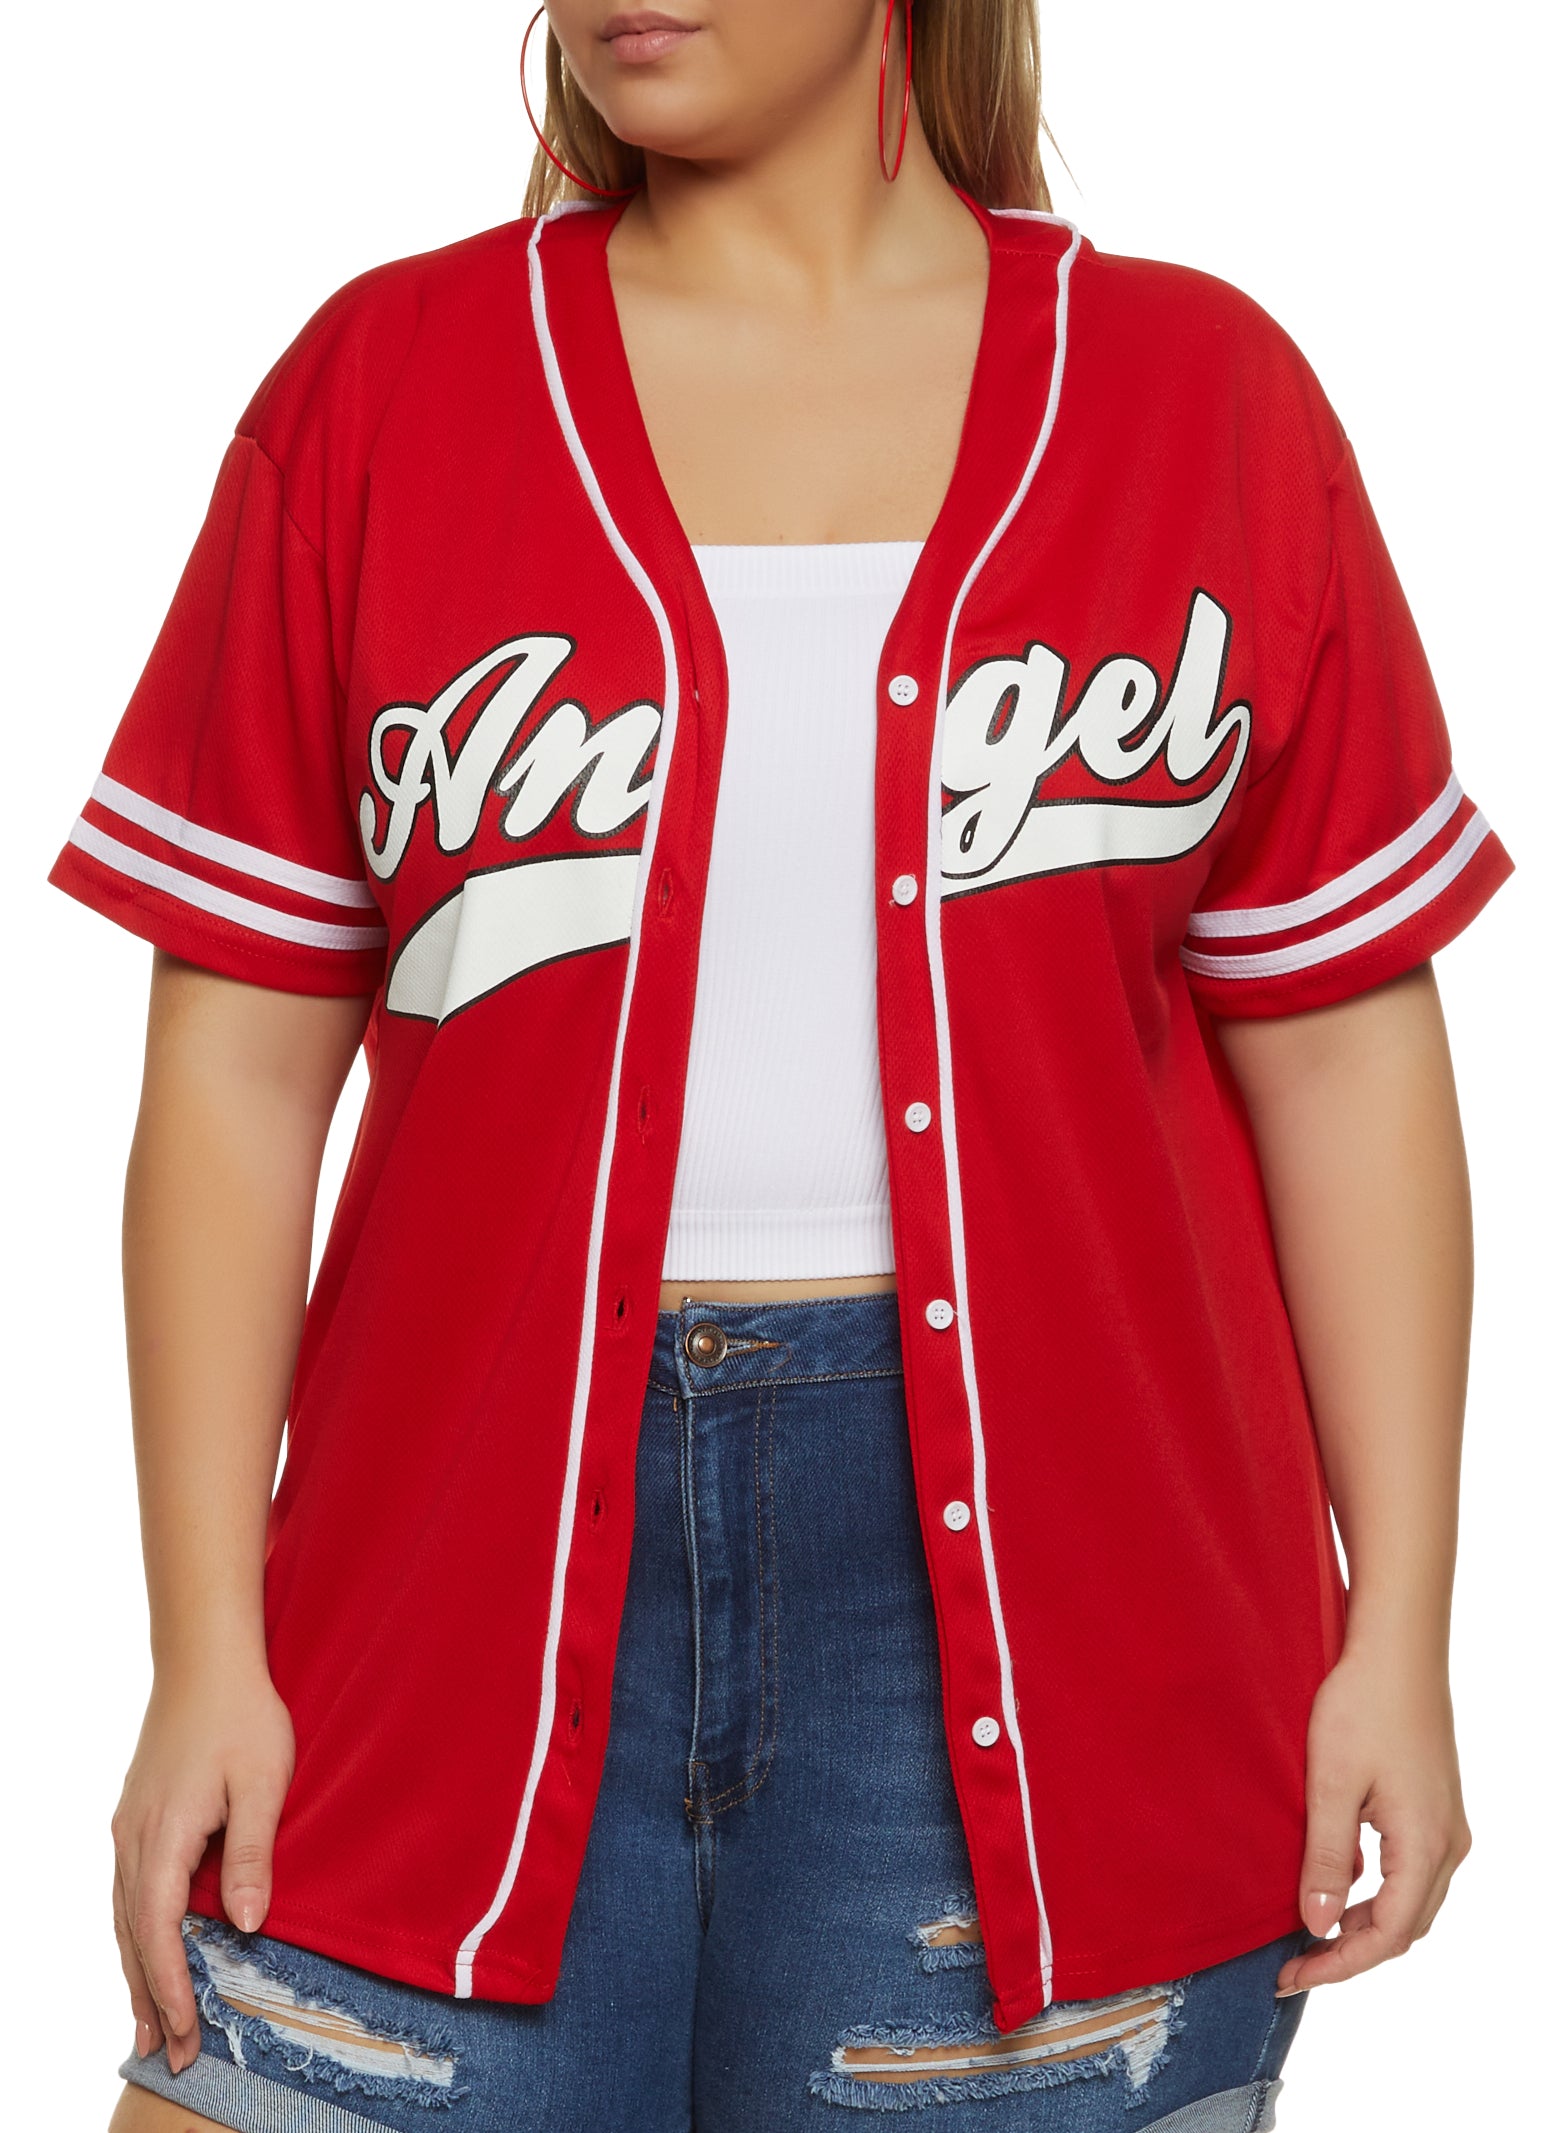 Buy the Womens Red White Short Sleeve V-Neck Button Front Baseball